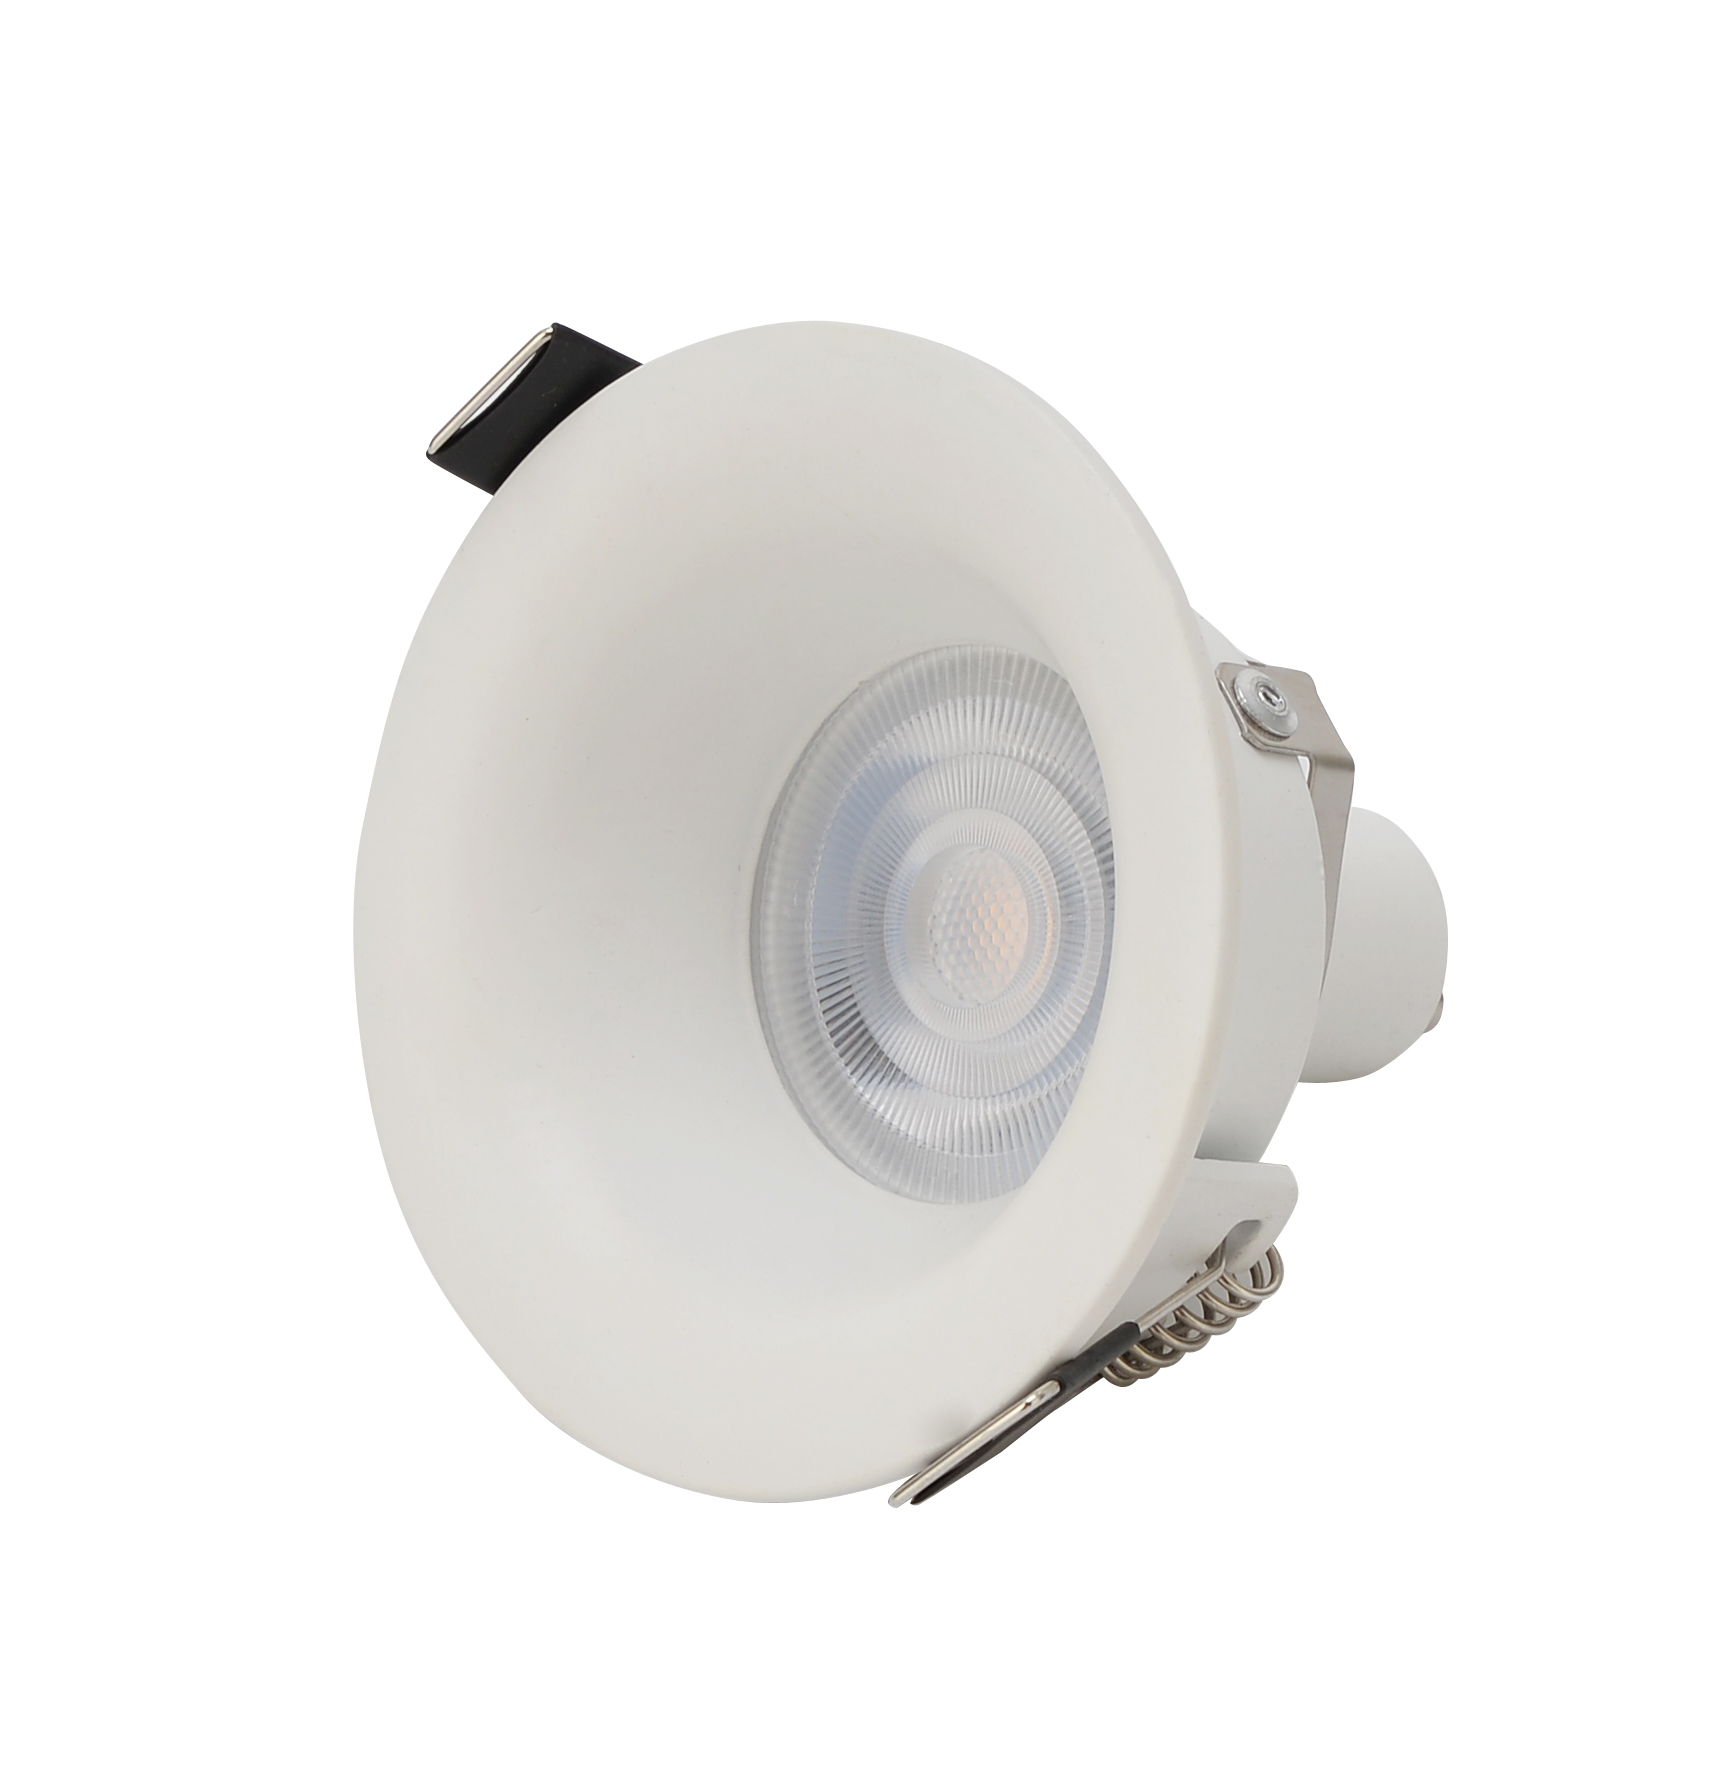 GU10 GU5.3 LED Trim Aluminum Housing Retrofit Spot Light Fixture Downlight Fittings MR16